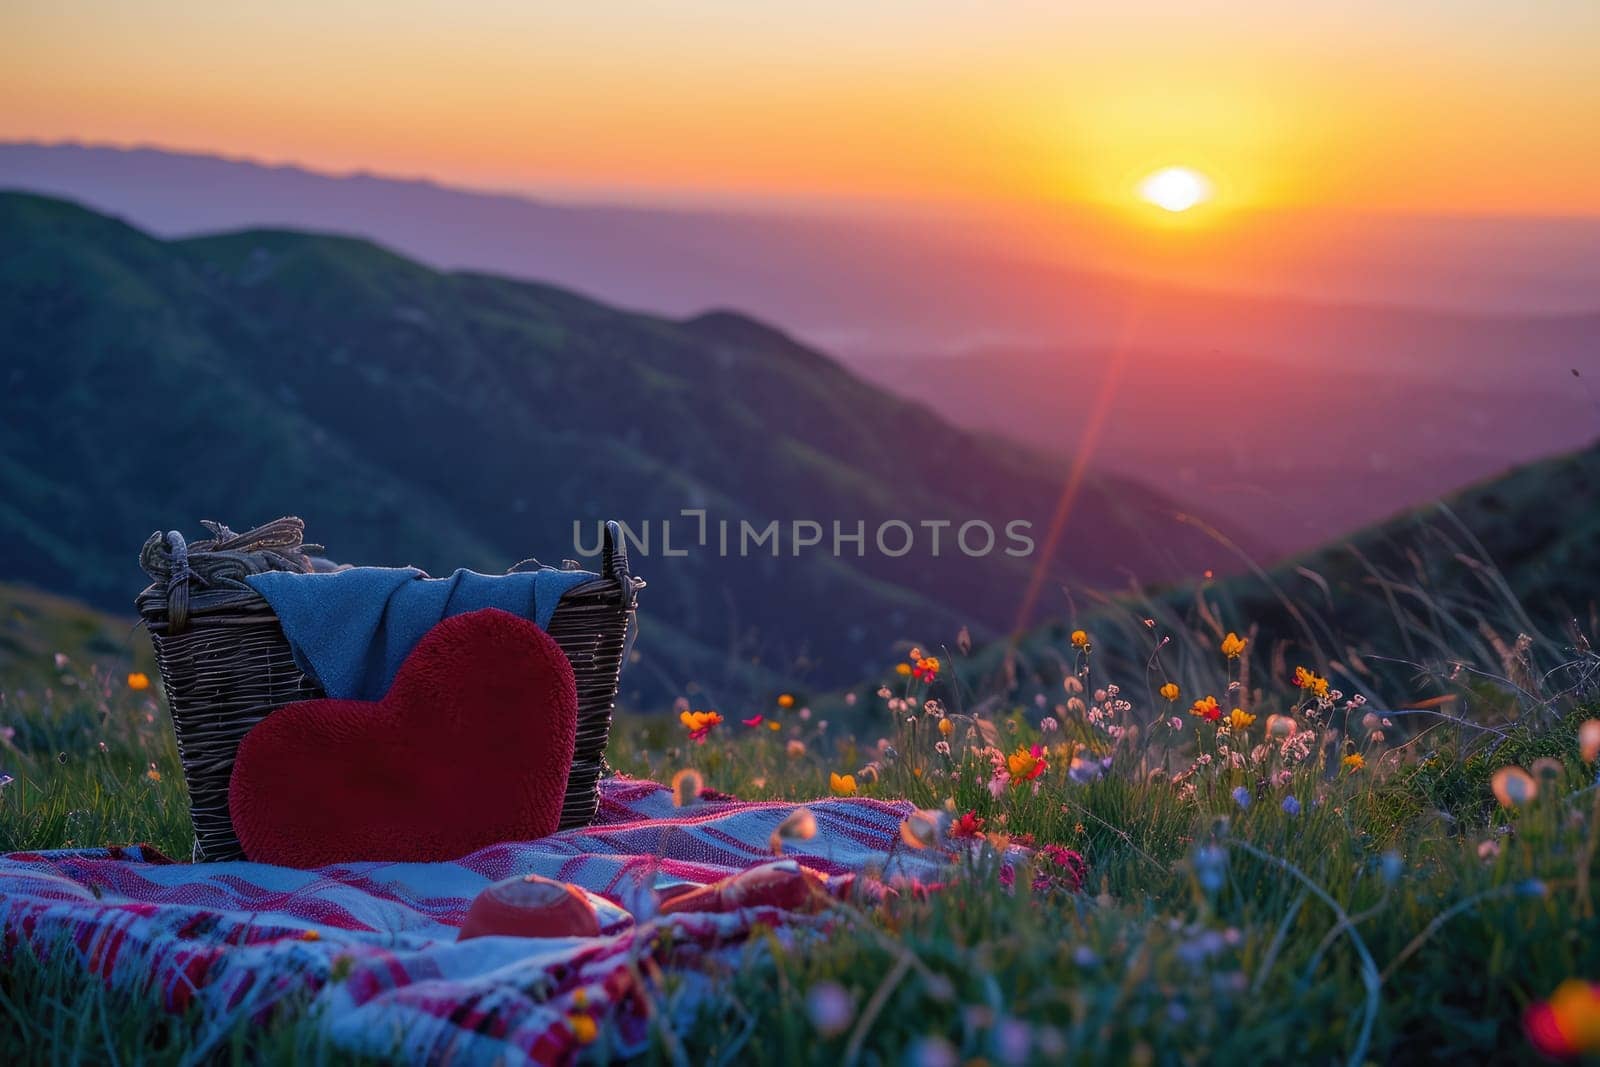 romantic sunrise mountain hiking with love of travel pragma